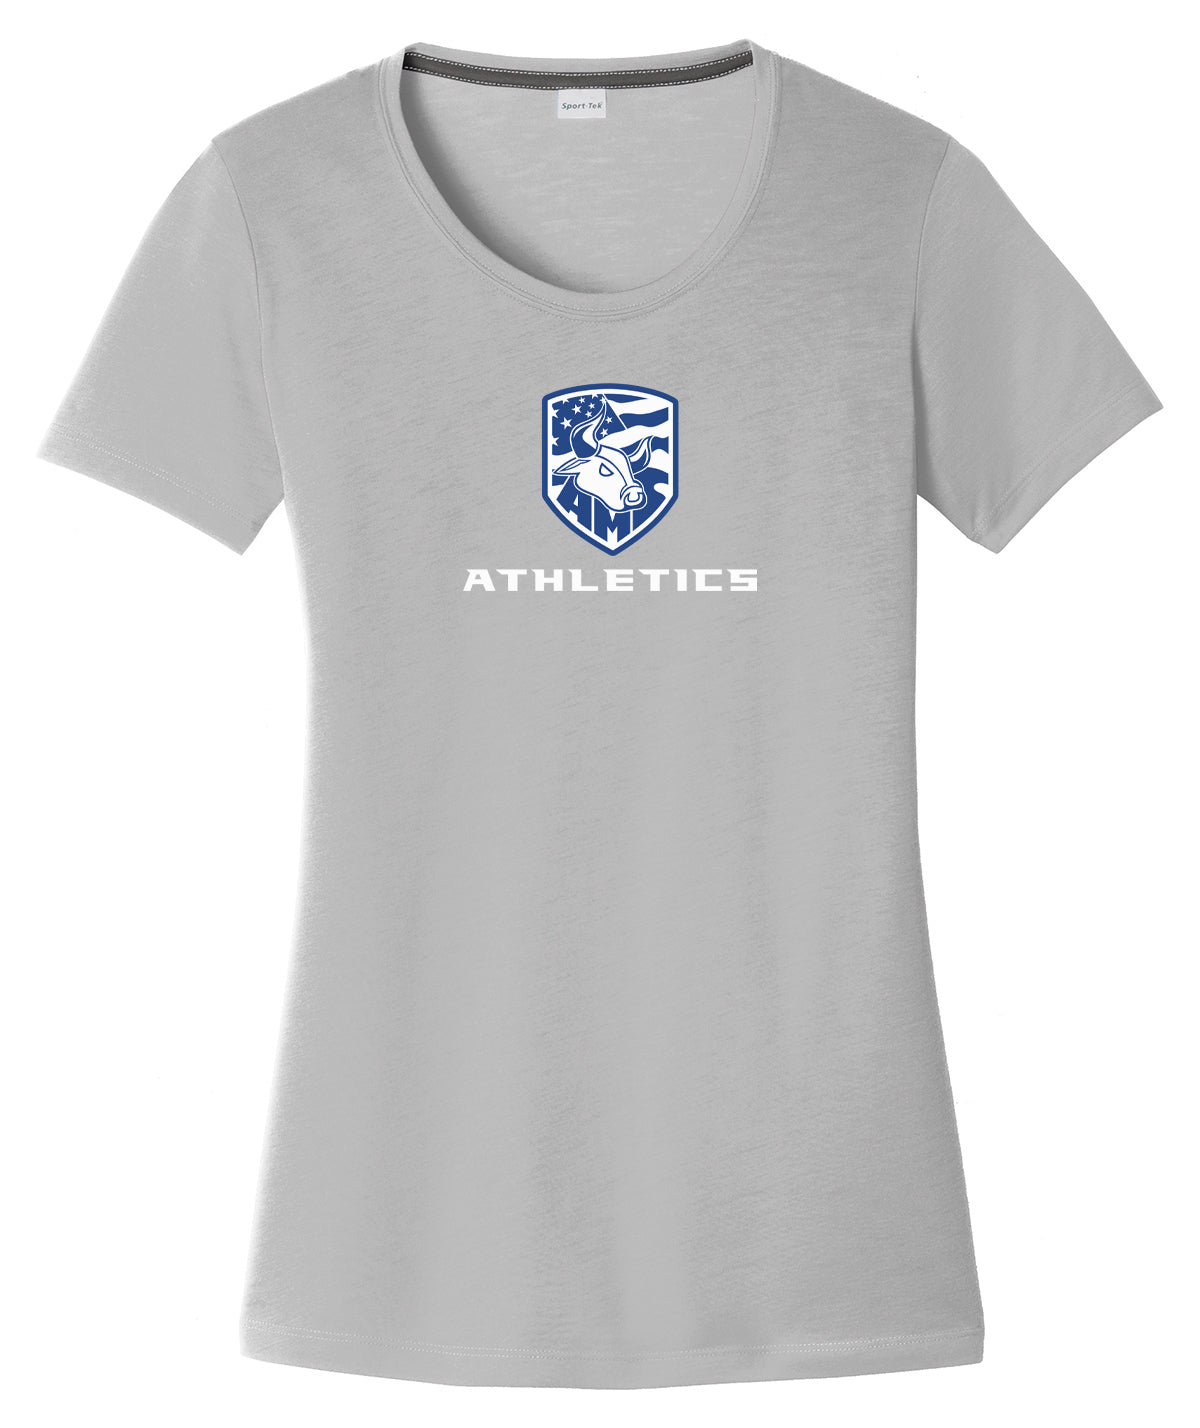 Accompsett Middle School Women's Silver CottonTouch Performance T-Shirt